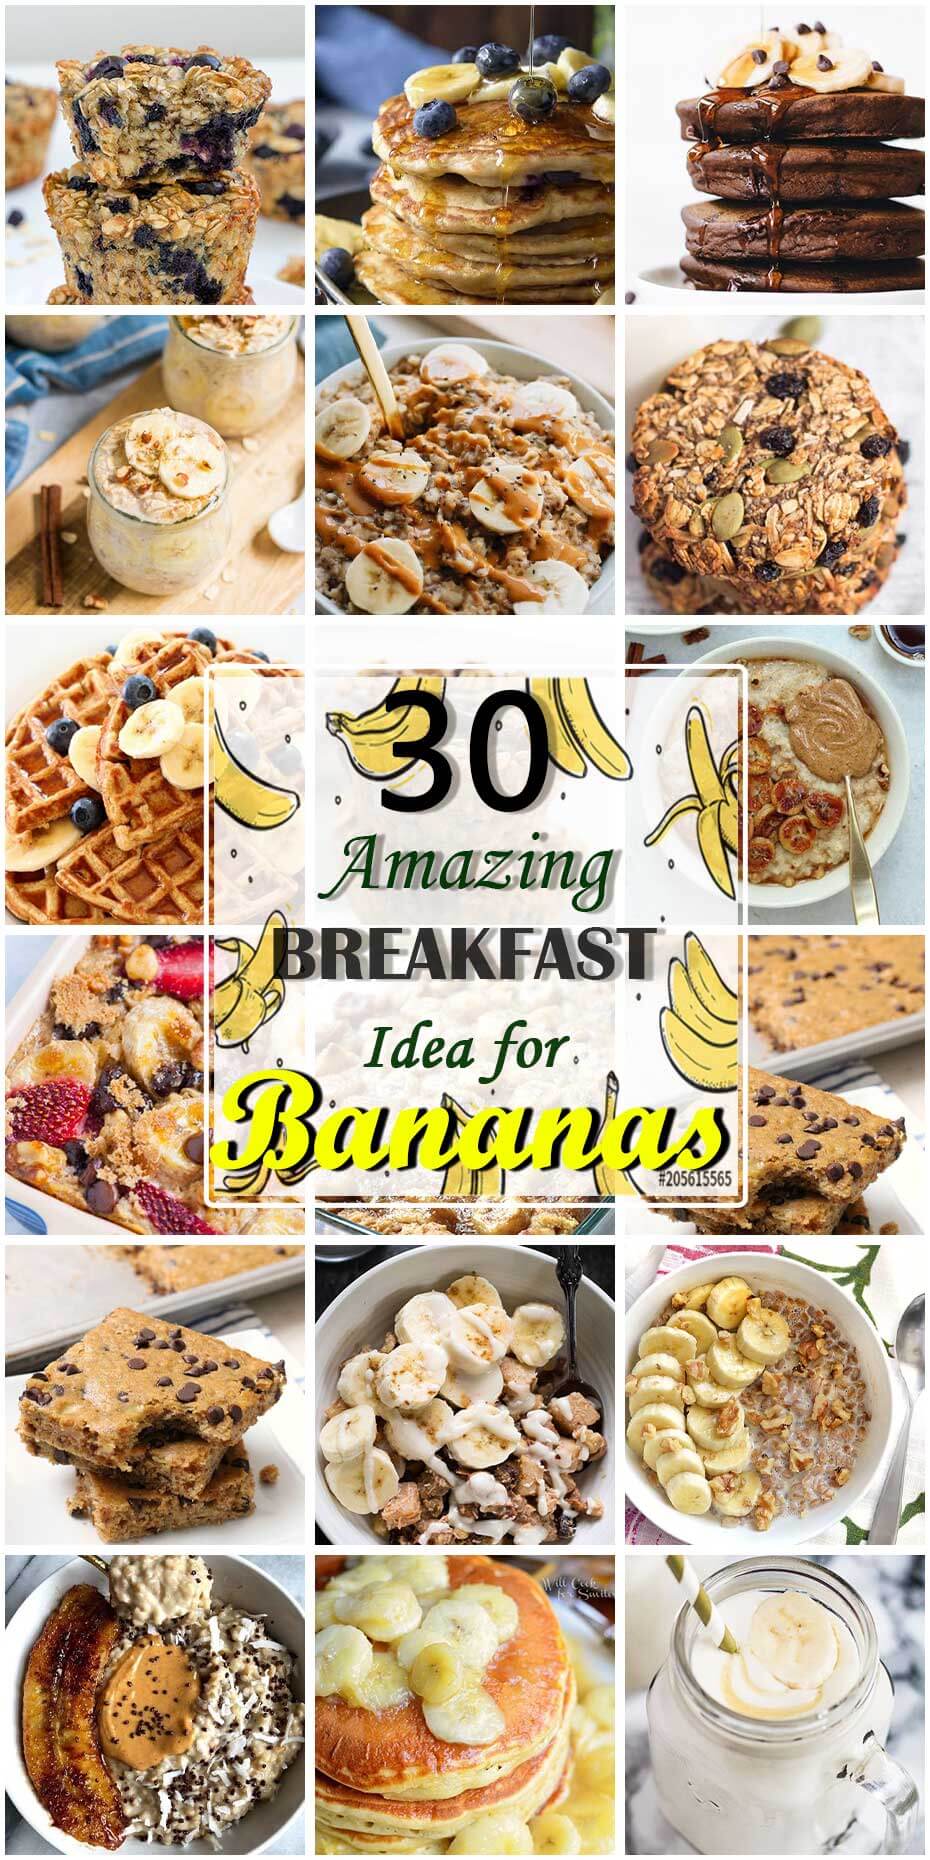 30 Amazing Breakfast Ideas For Bananas Easy And Healthy Recipes